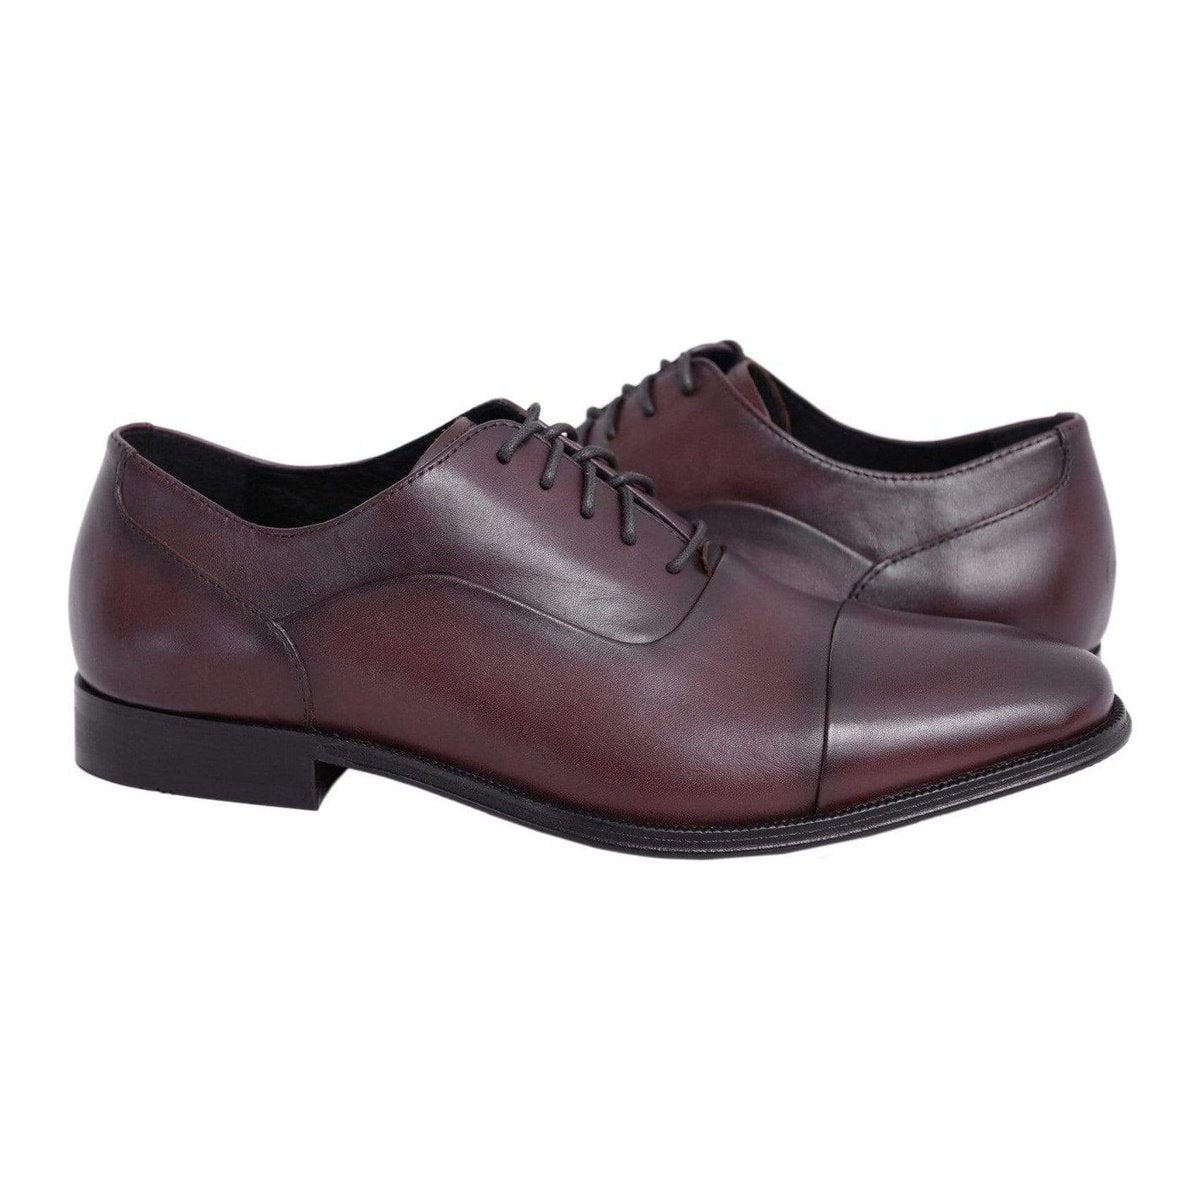 Florsheim SHOES 8.5 Florsheim Solid Dark Brown Cap Toe Oxford Leather Dress Shoes